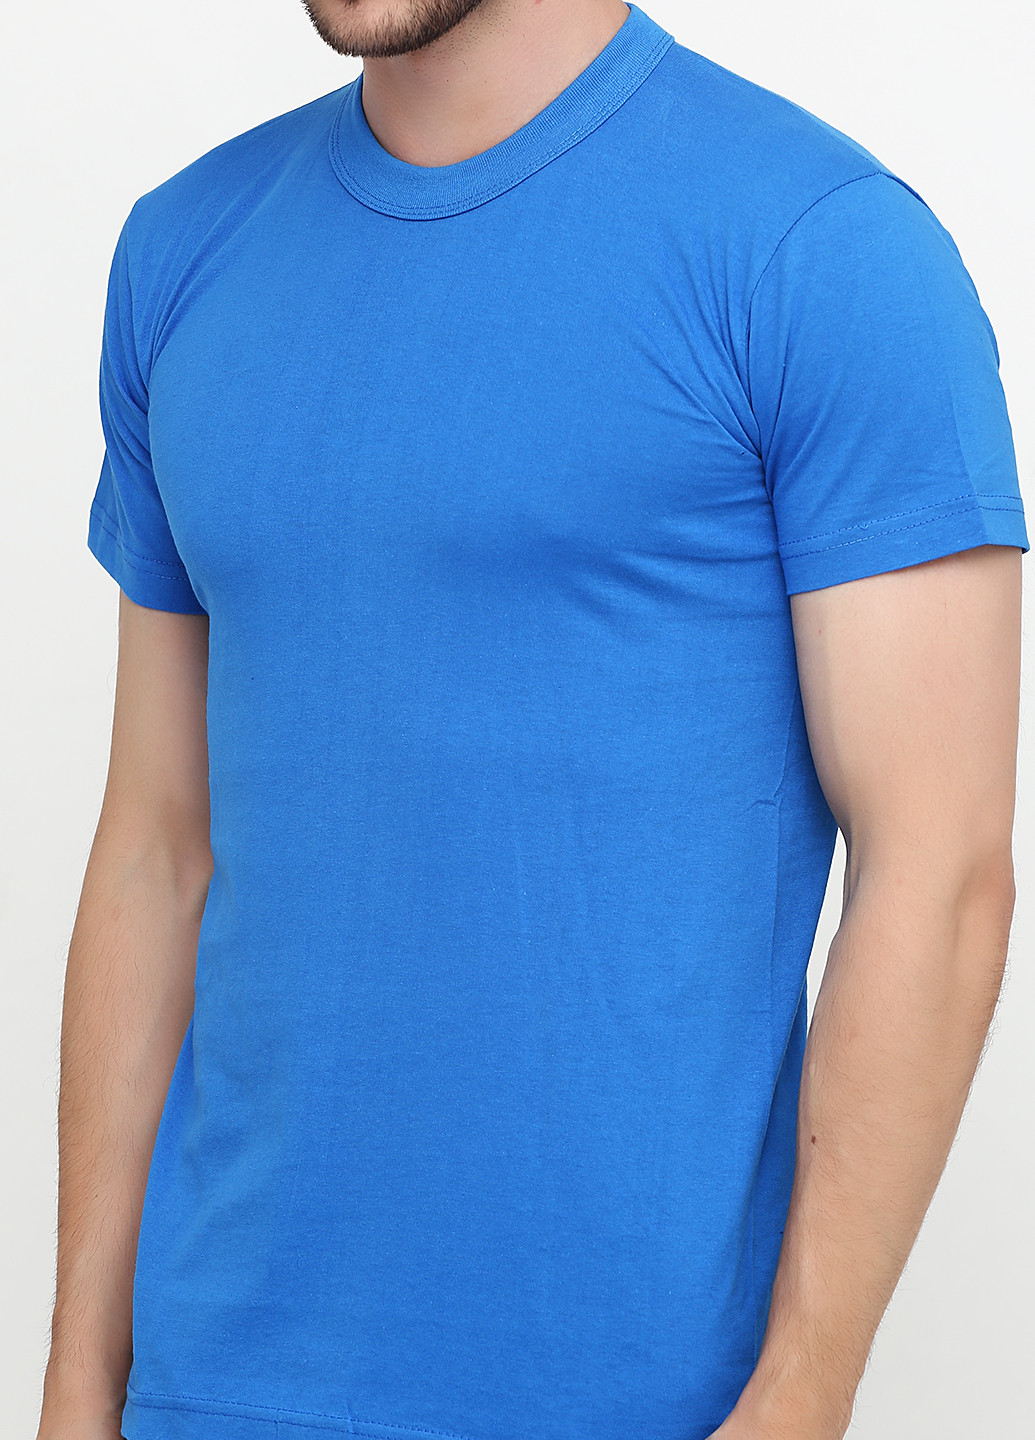 Синяя футболка 34304 синий Mevsim